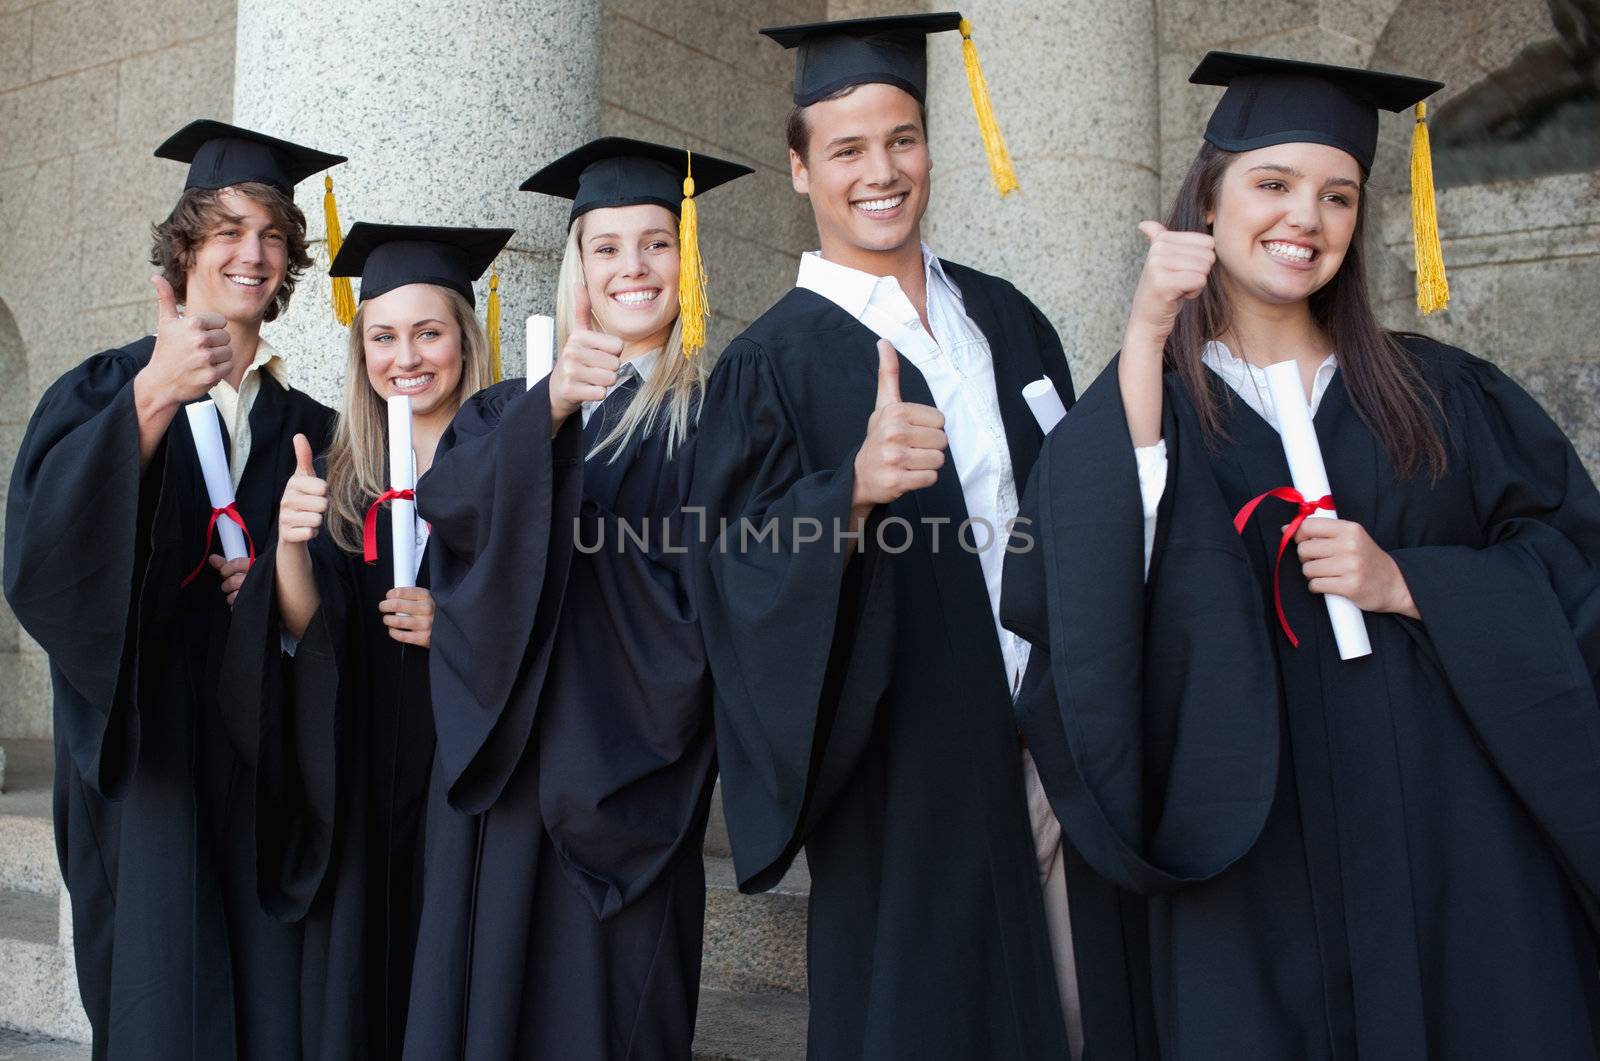 Graduates posing the thumb-up by Wavebreakmedia